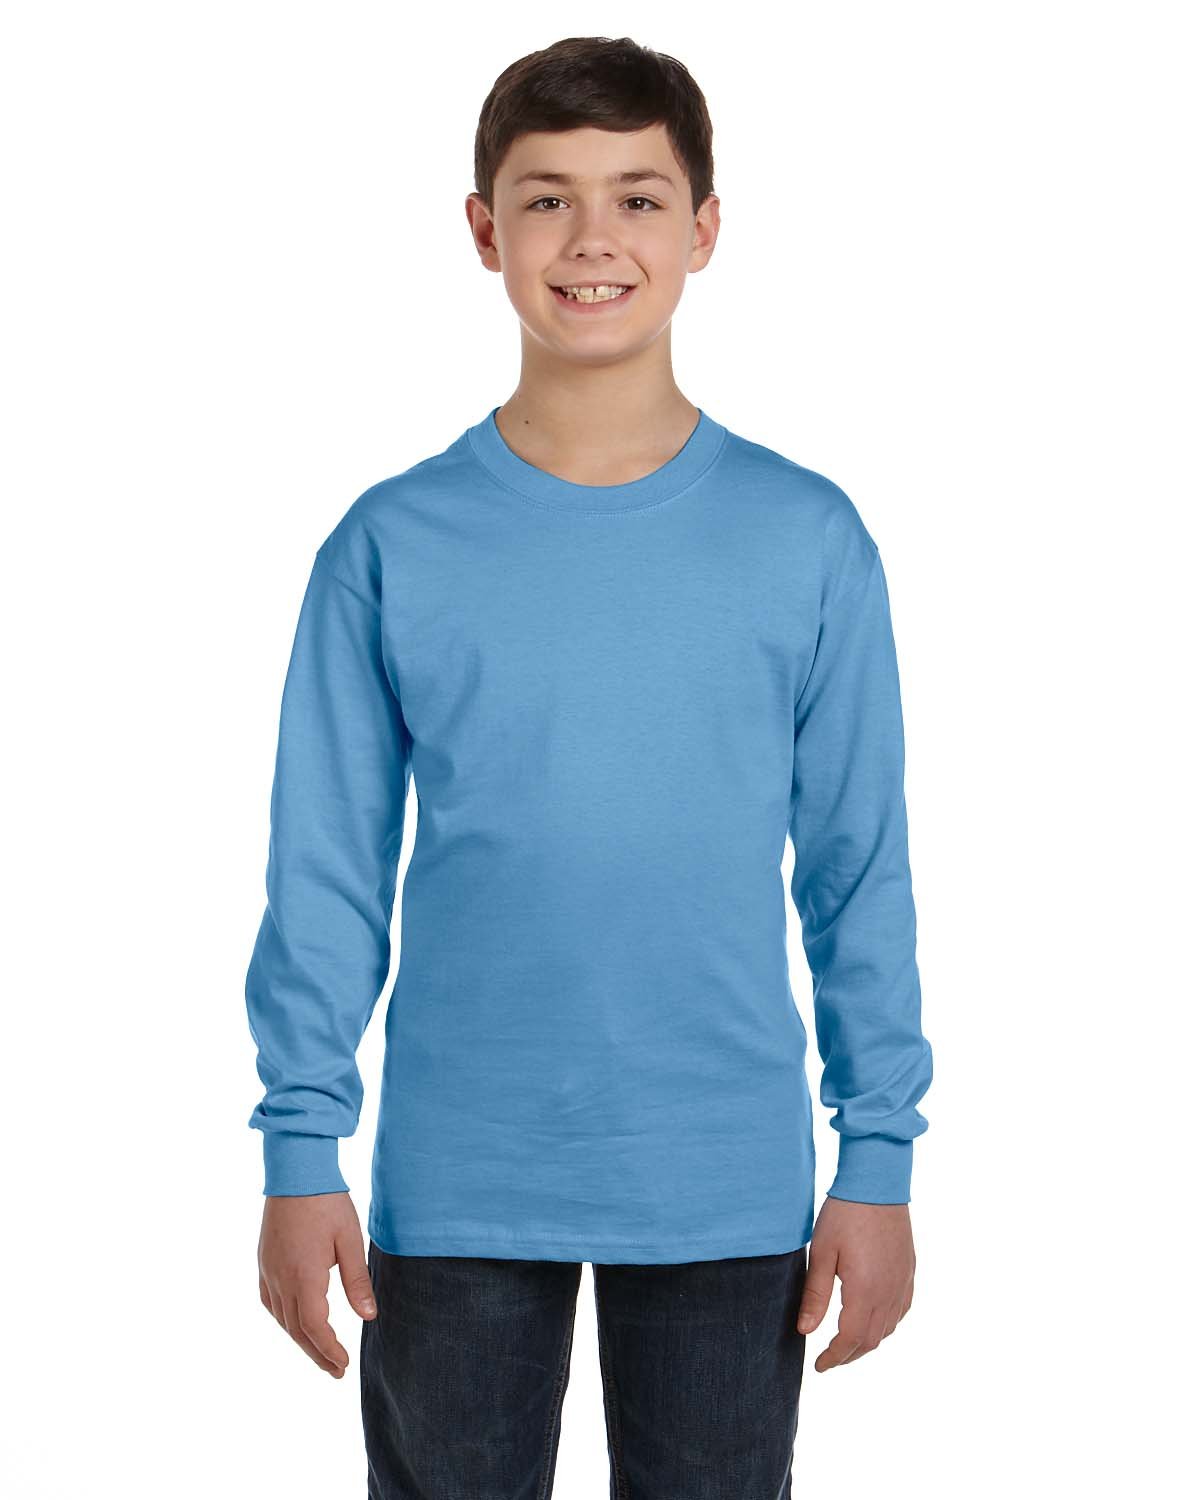 A006 540B Youth Heavy Cotton Long-Sleeve T-Shirt